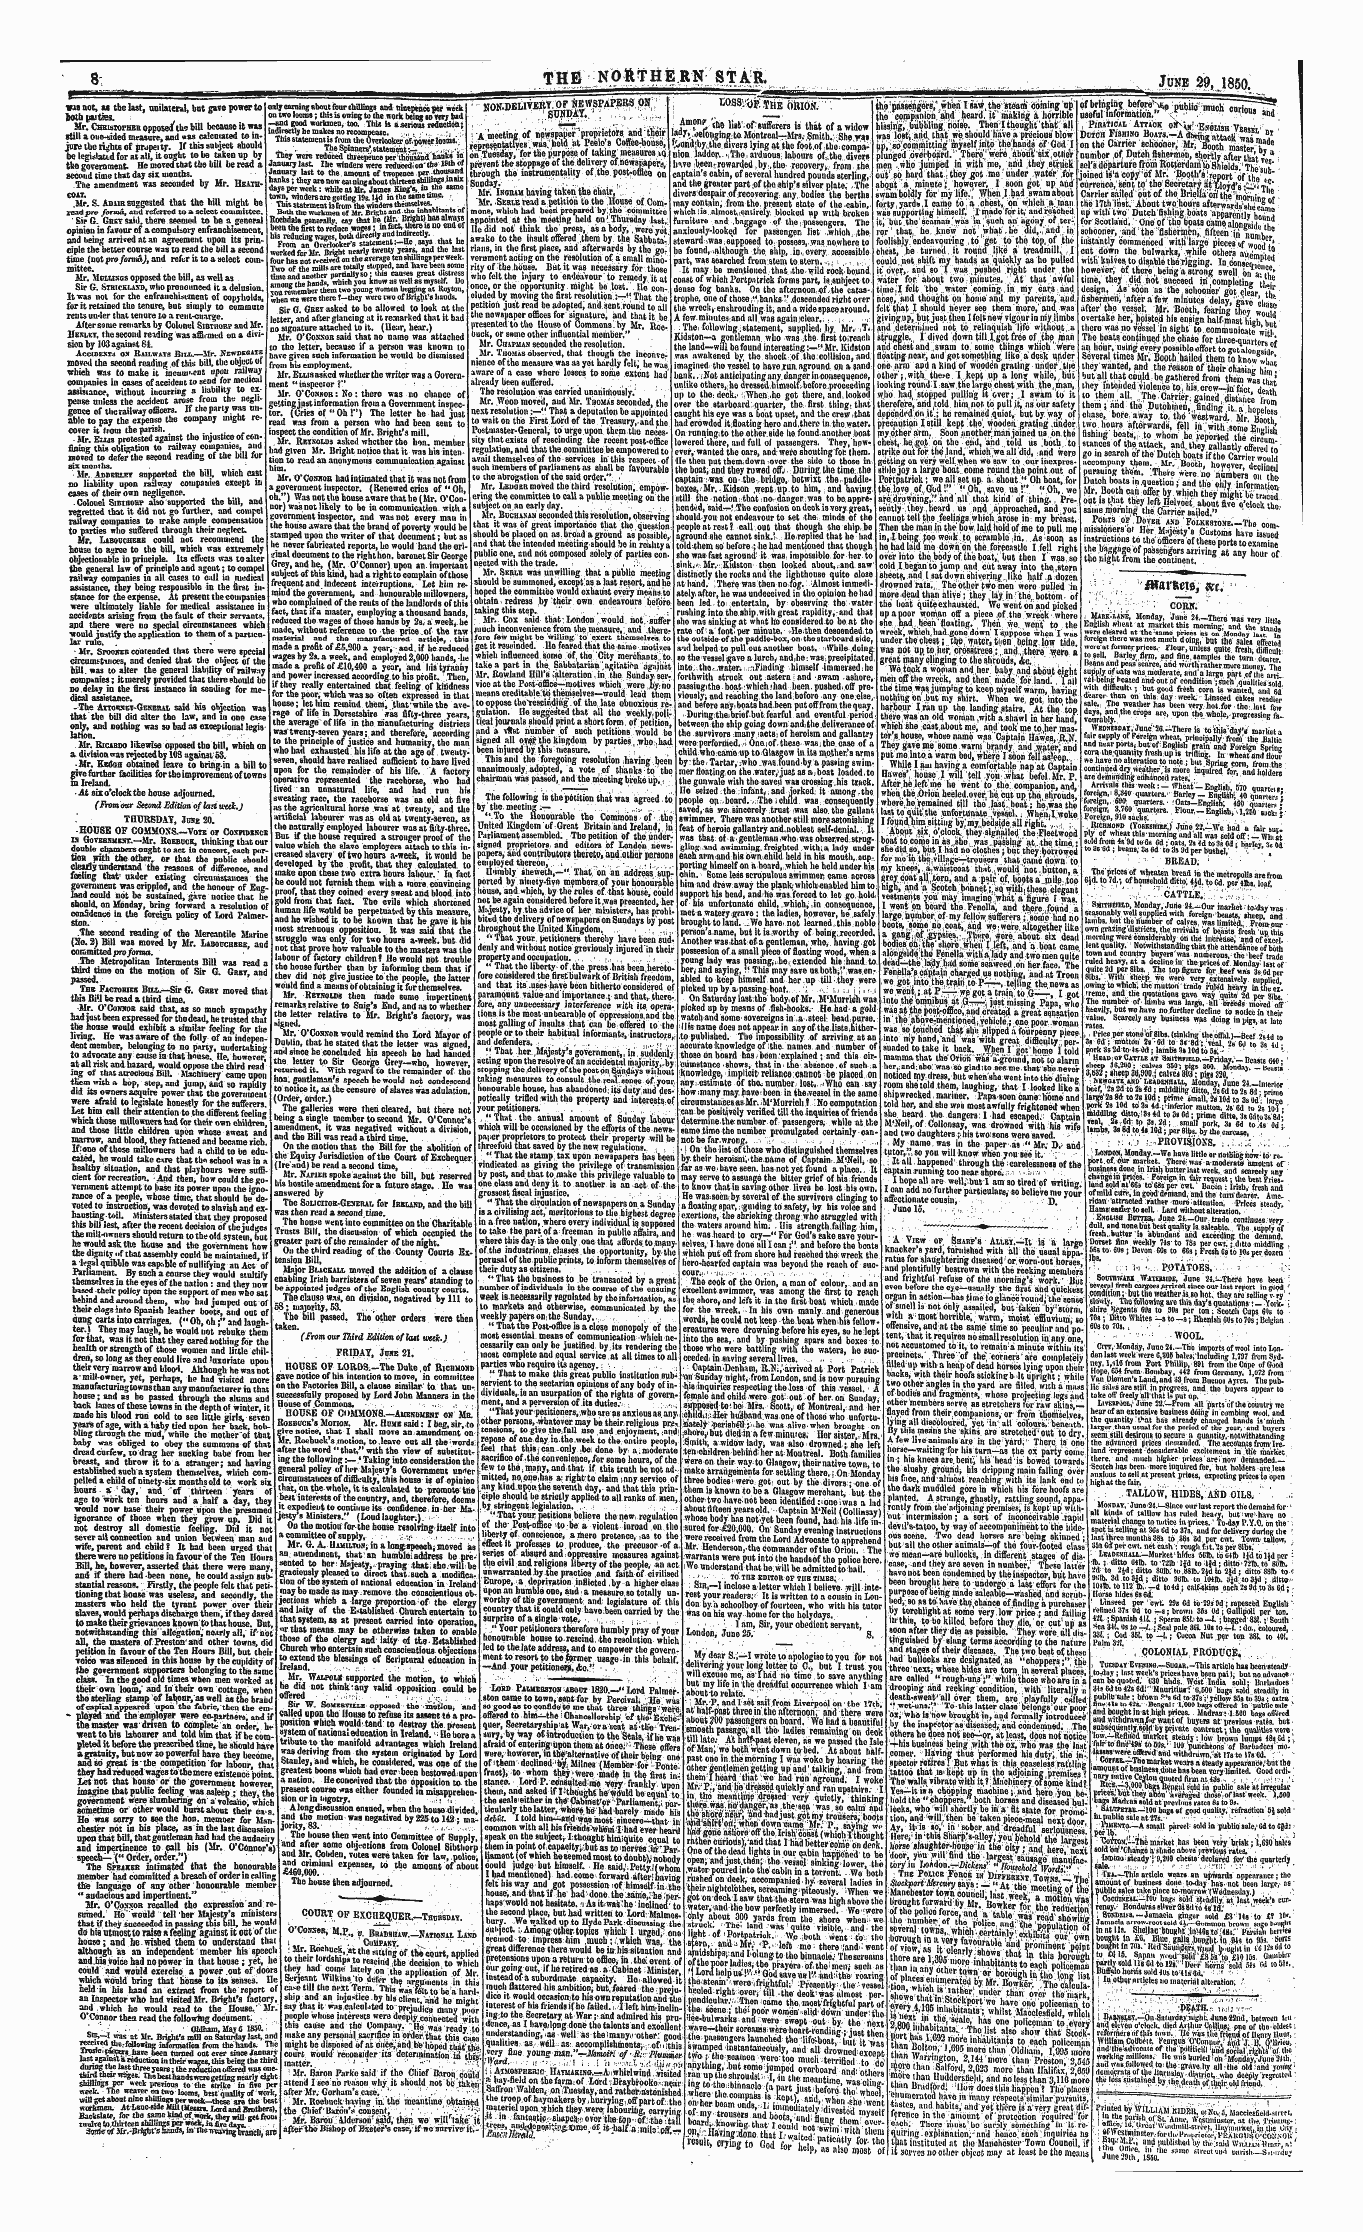 Northern Star (1837-1852): jS F Y, 1st edition - E?^ L T&^I^^^Ipeilcomo.Srilacci^Eld.S.Rett